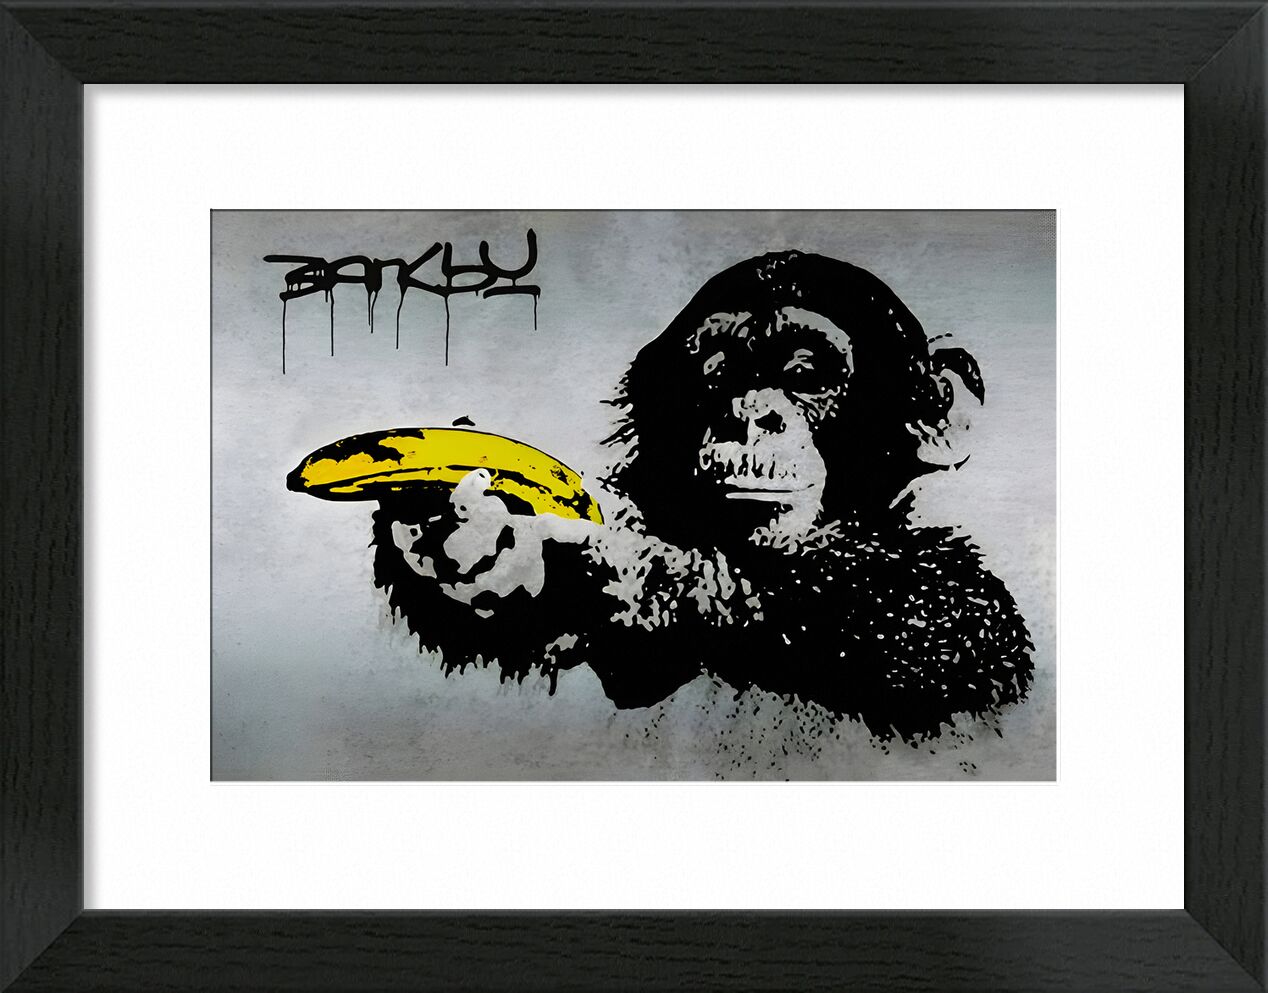 Monkey with Banana - Banksy von Bildende Kunst, Prodi Art, banksy, Affe, Graffiti, Bananen, Mauer